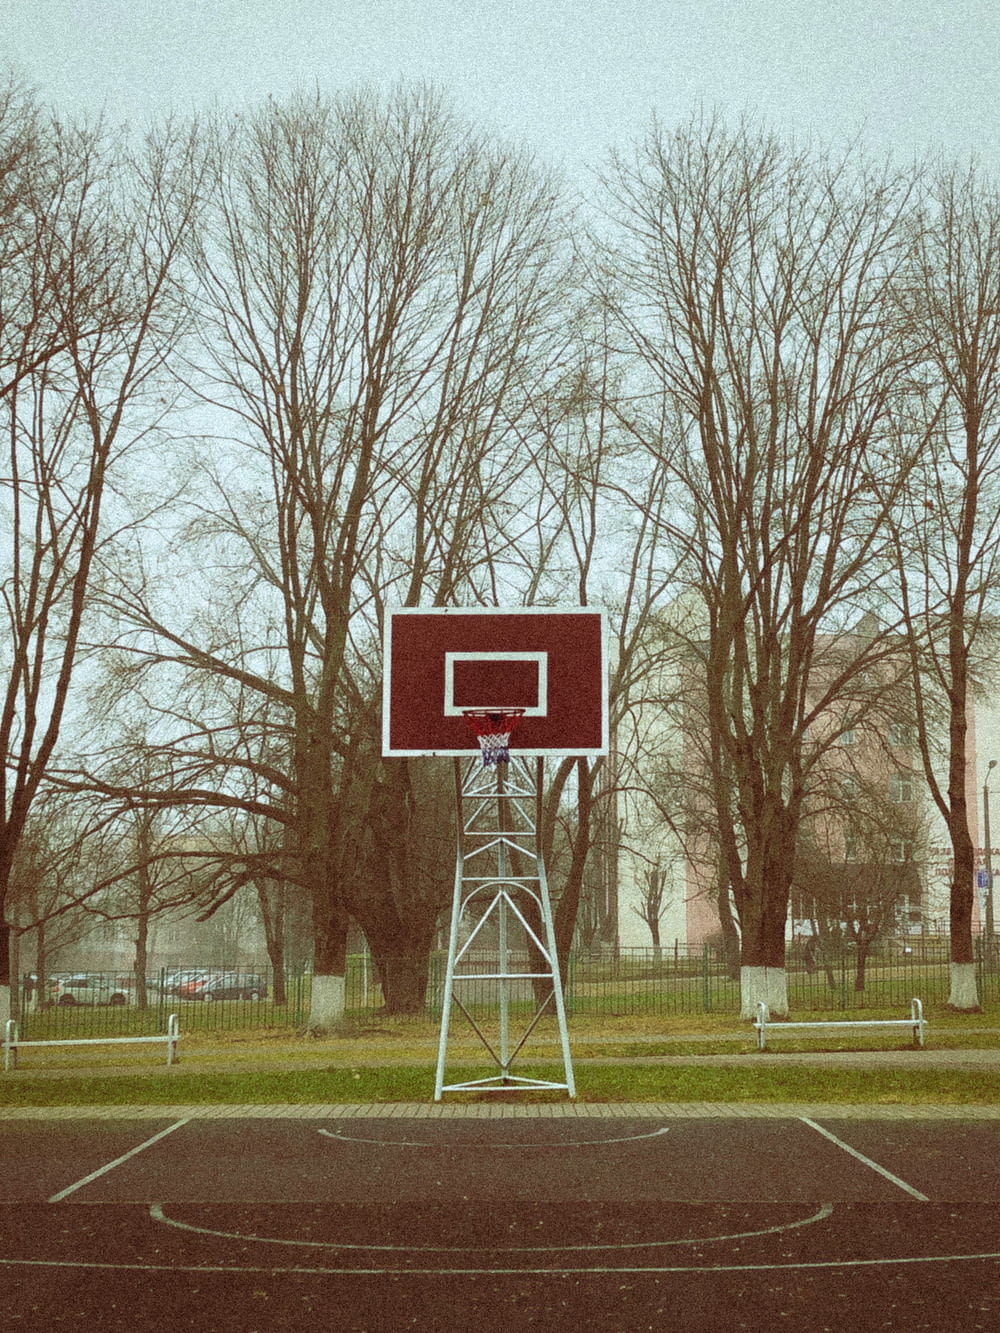 a basketball hoop in a park